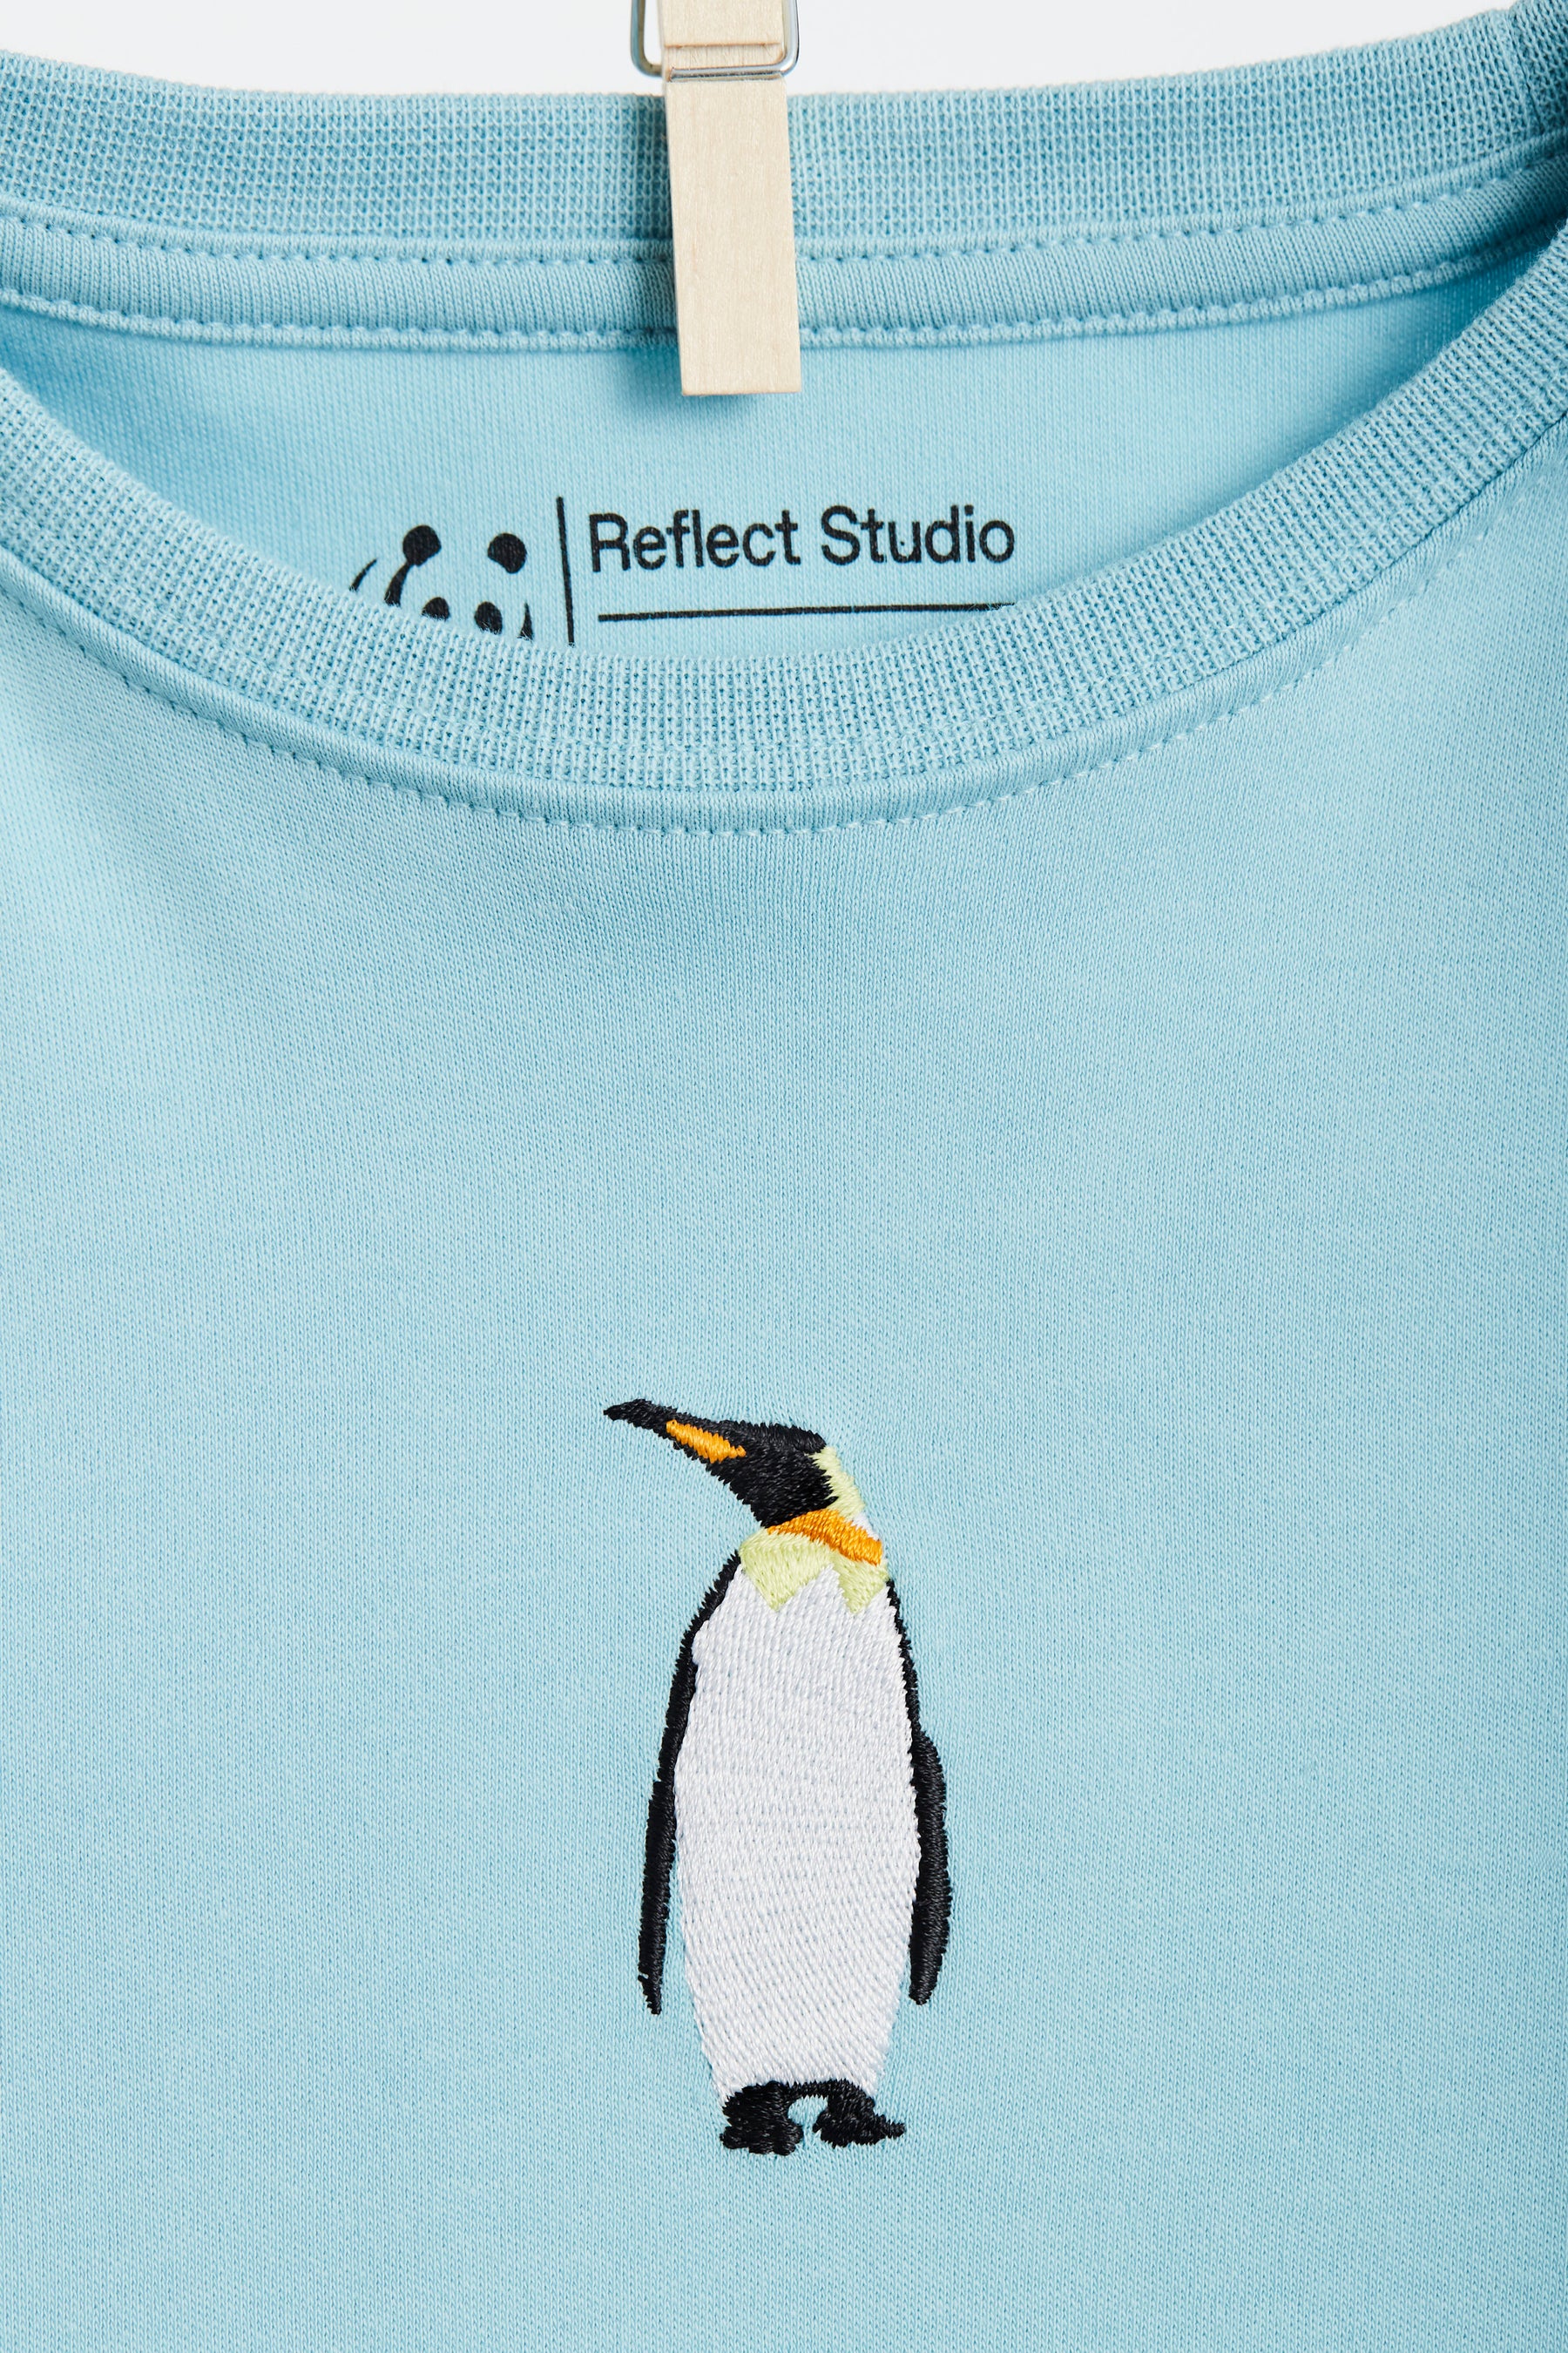 Kinder T-Shirt // Pinguin // Mint